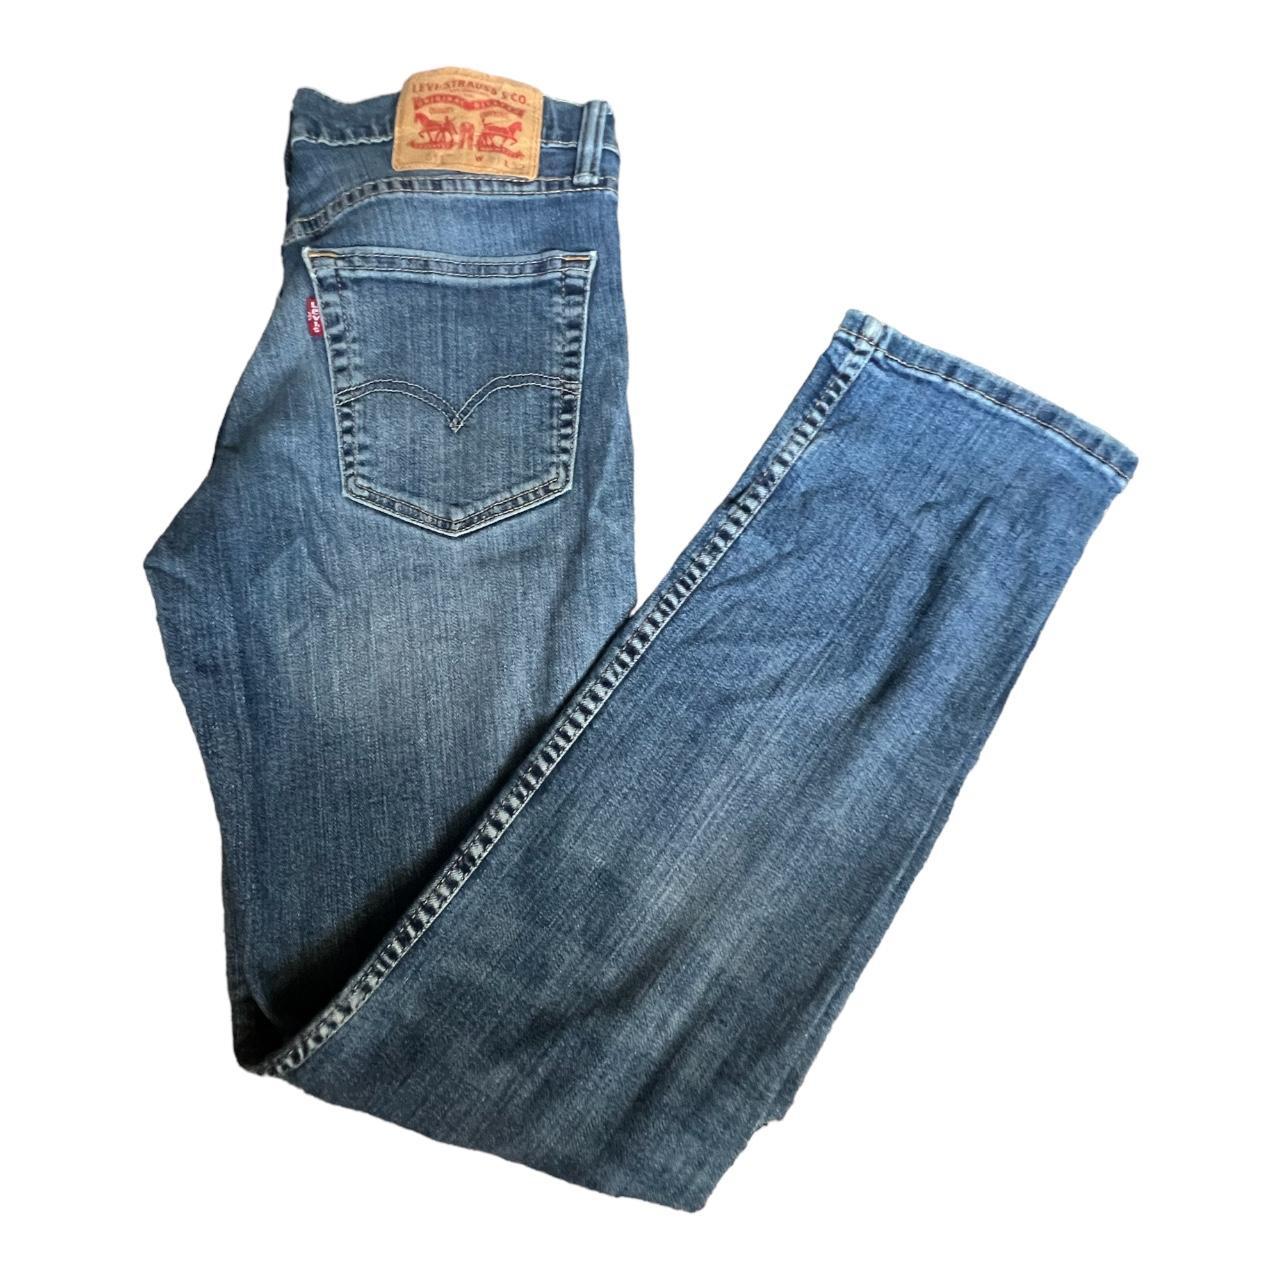 levi 511 denim jeans size 30x32 slim/skinny fit no... - Depop